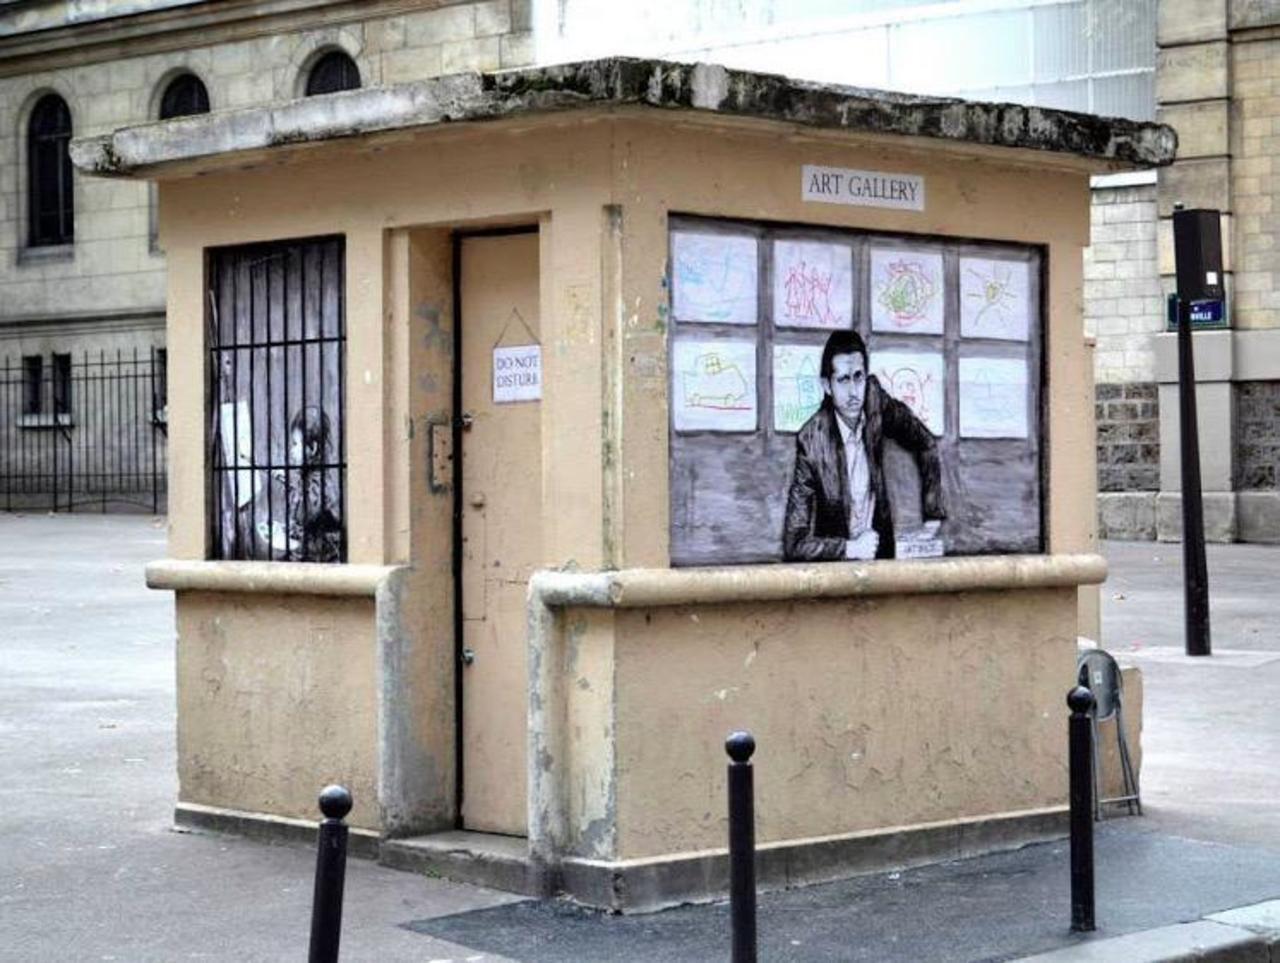 RT @BenWest: RT @GhislaineGATINE: #streetart by #Levalet in #Paris #switch #graffiti #bedifferent #art #art http://t.co/vBNpNjPEFJ